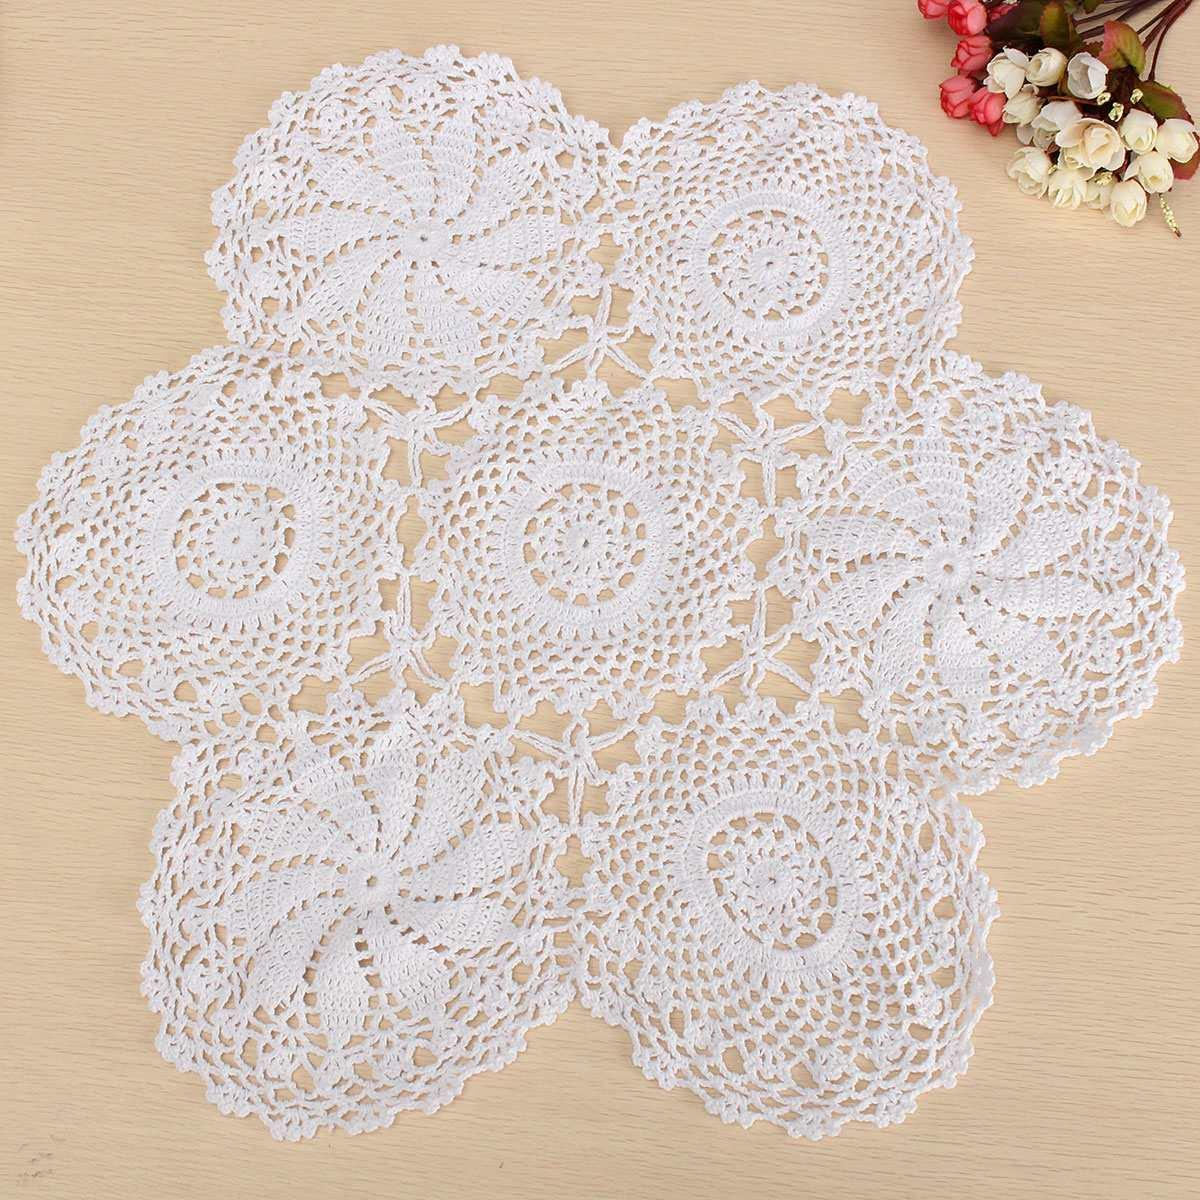 Crochet Centerpiece Pattern 2019 Wholesale 23 Round Cotton White Hand Crochet Floral Table